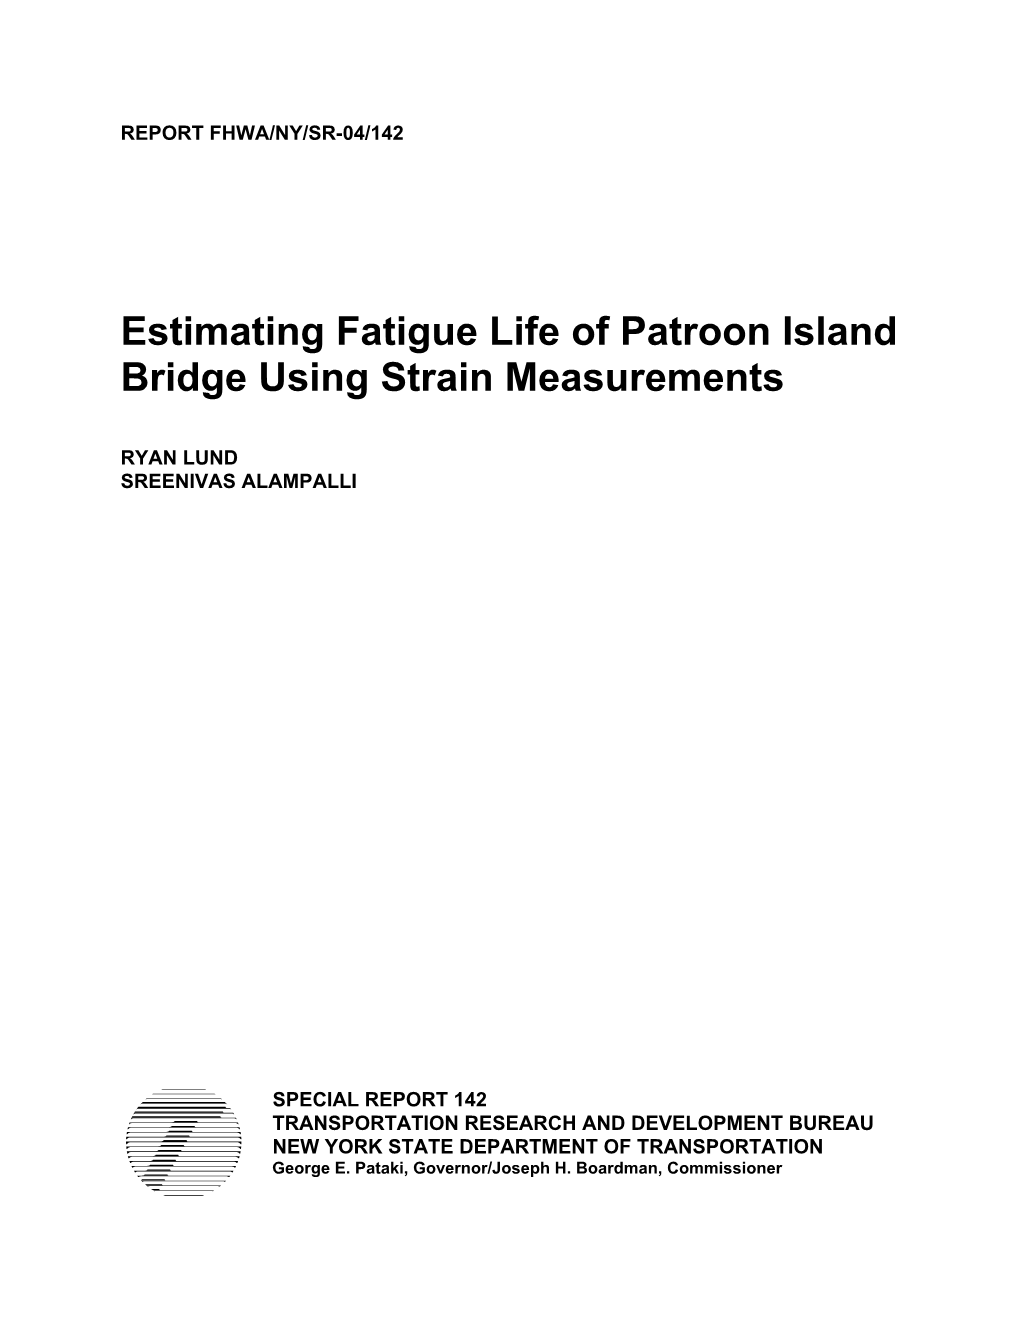 Estimating Fatigue Life of Patroon Island Bridge Using Strain Measurements